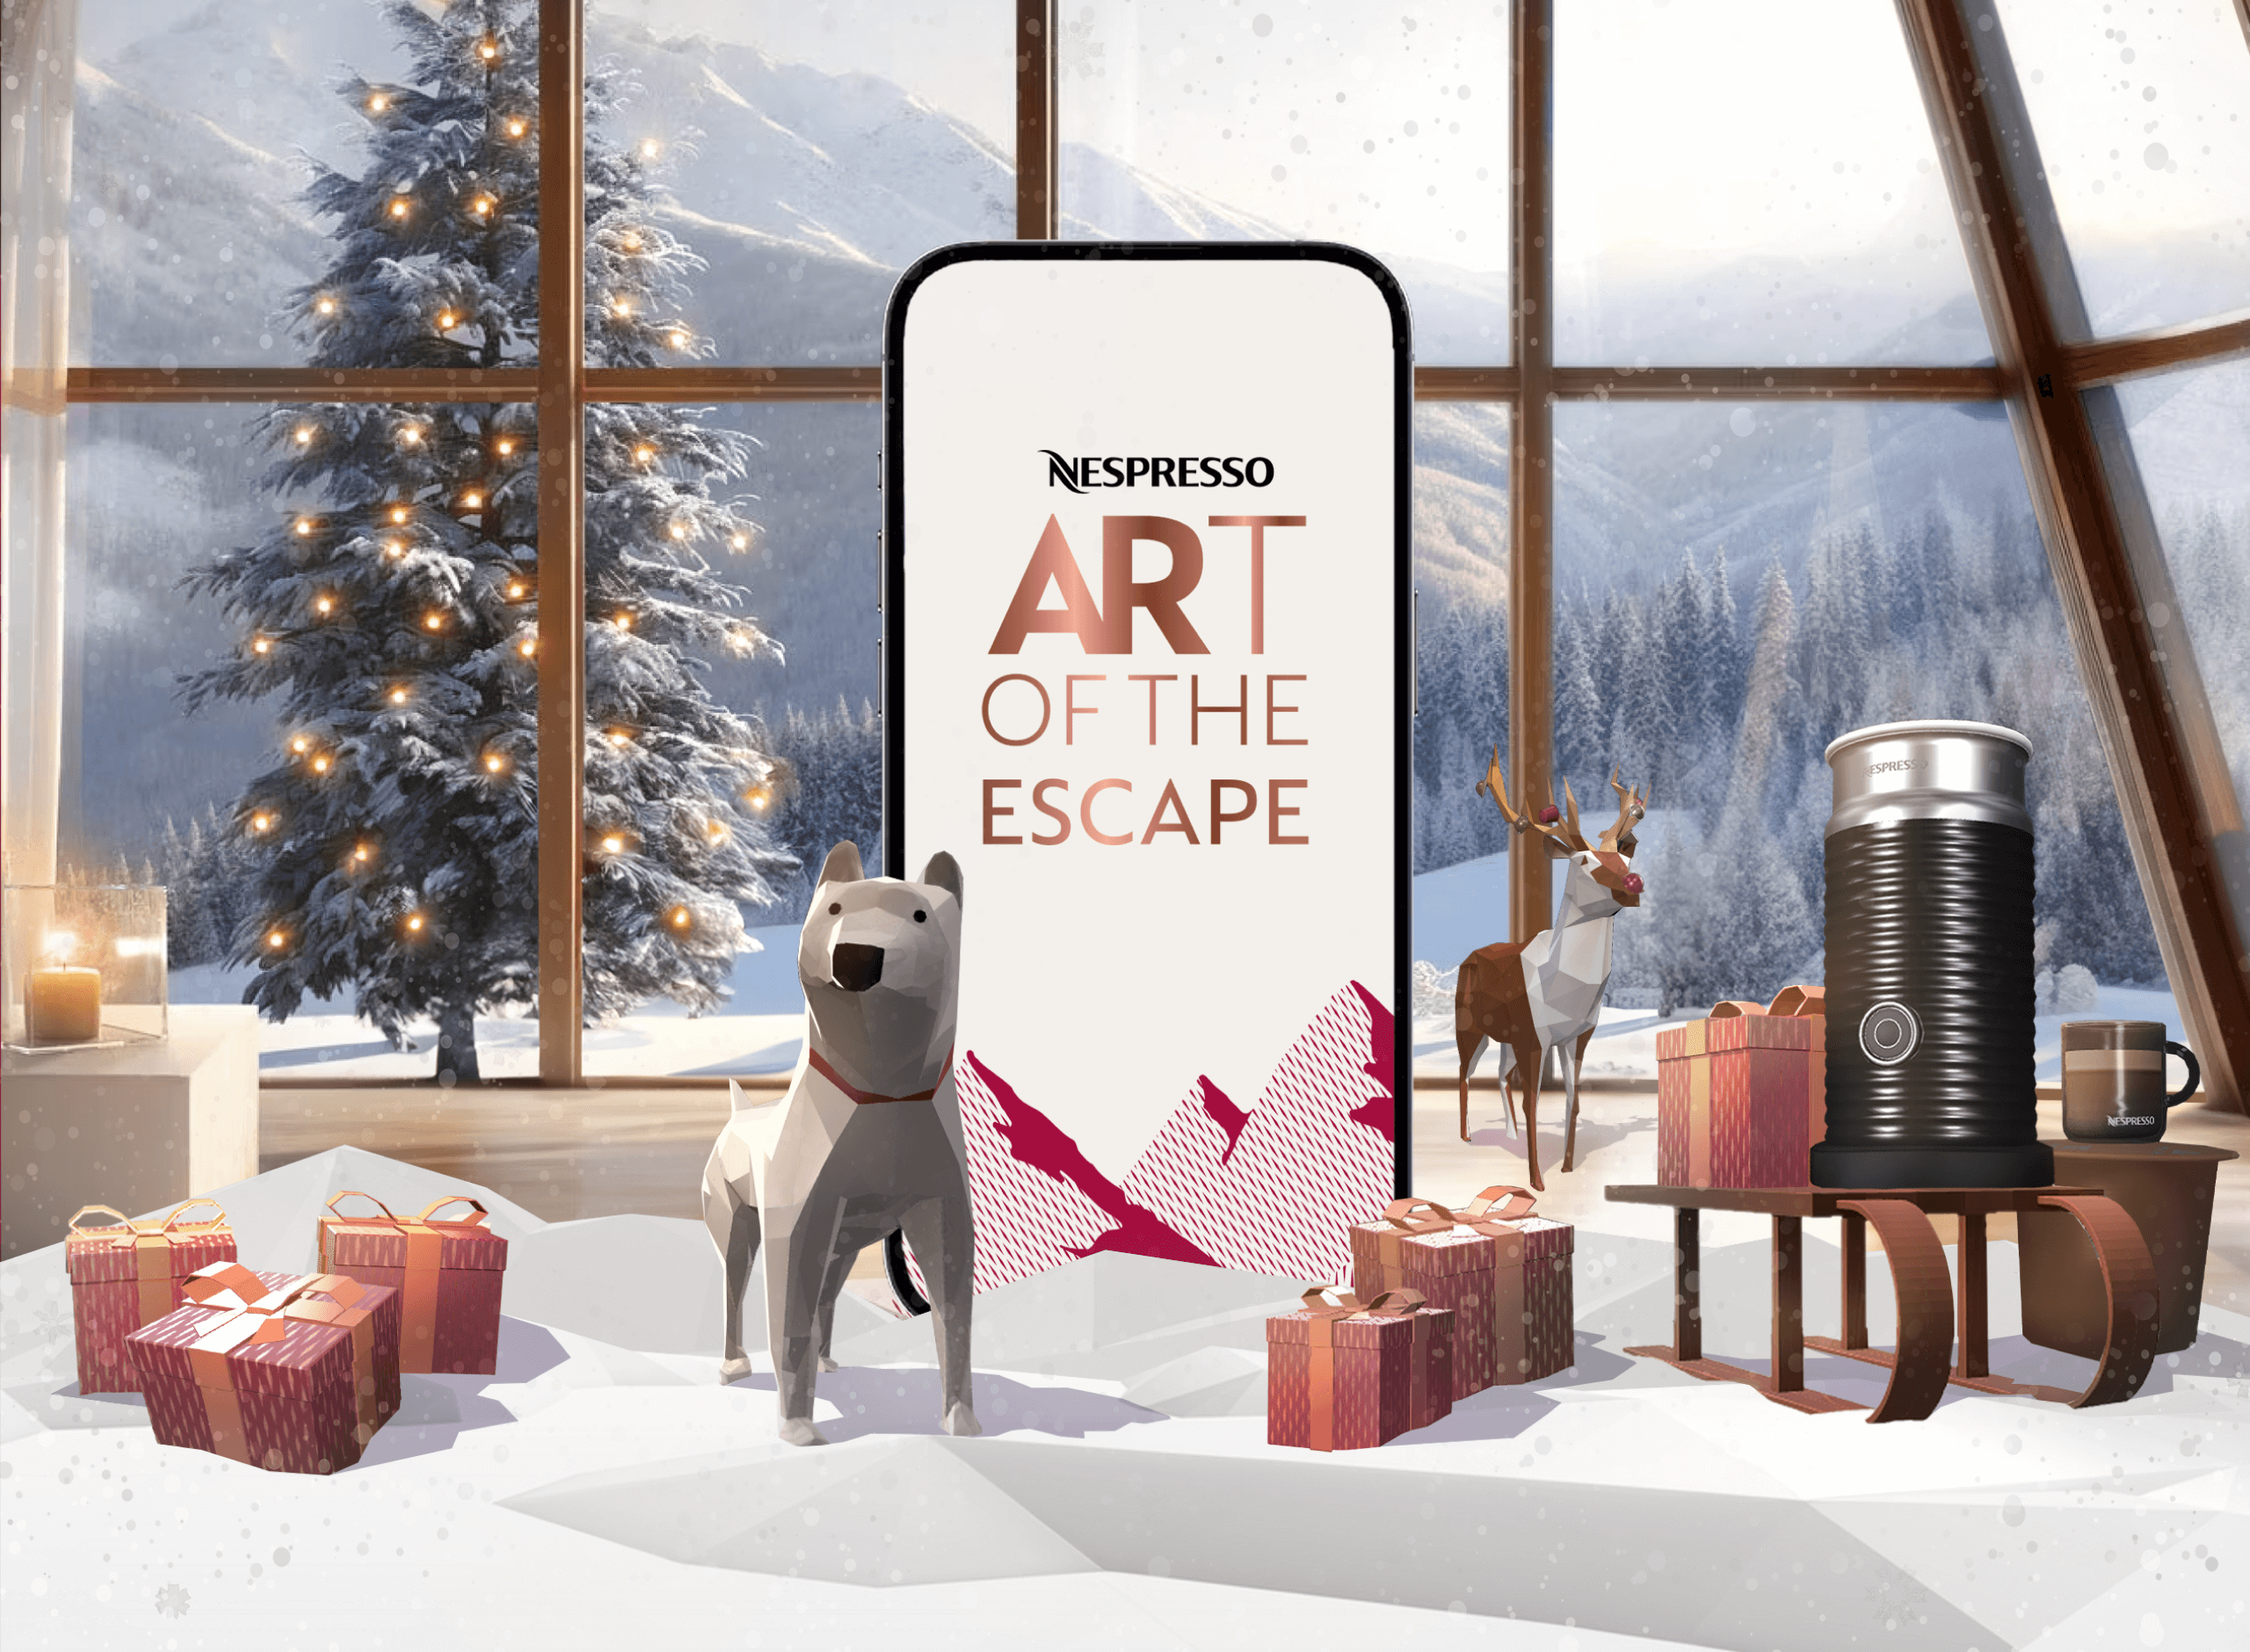 ARt of the Escape winter wonderland backdrop